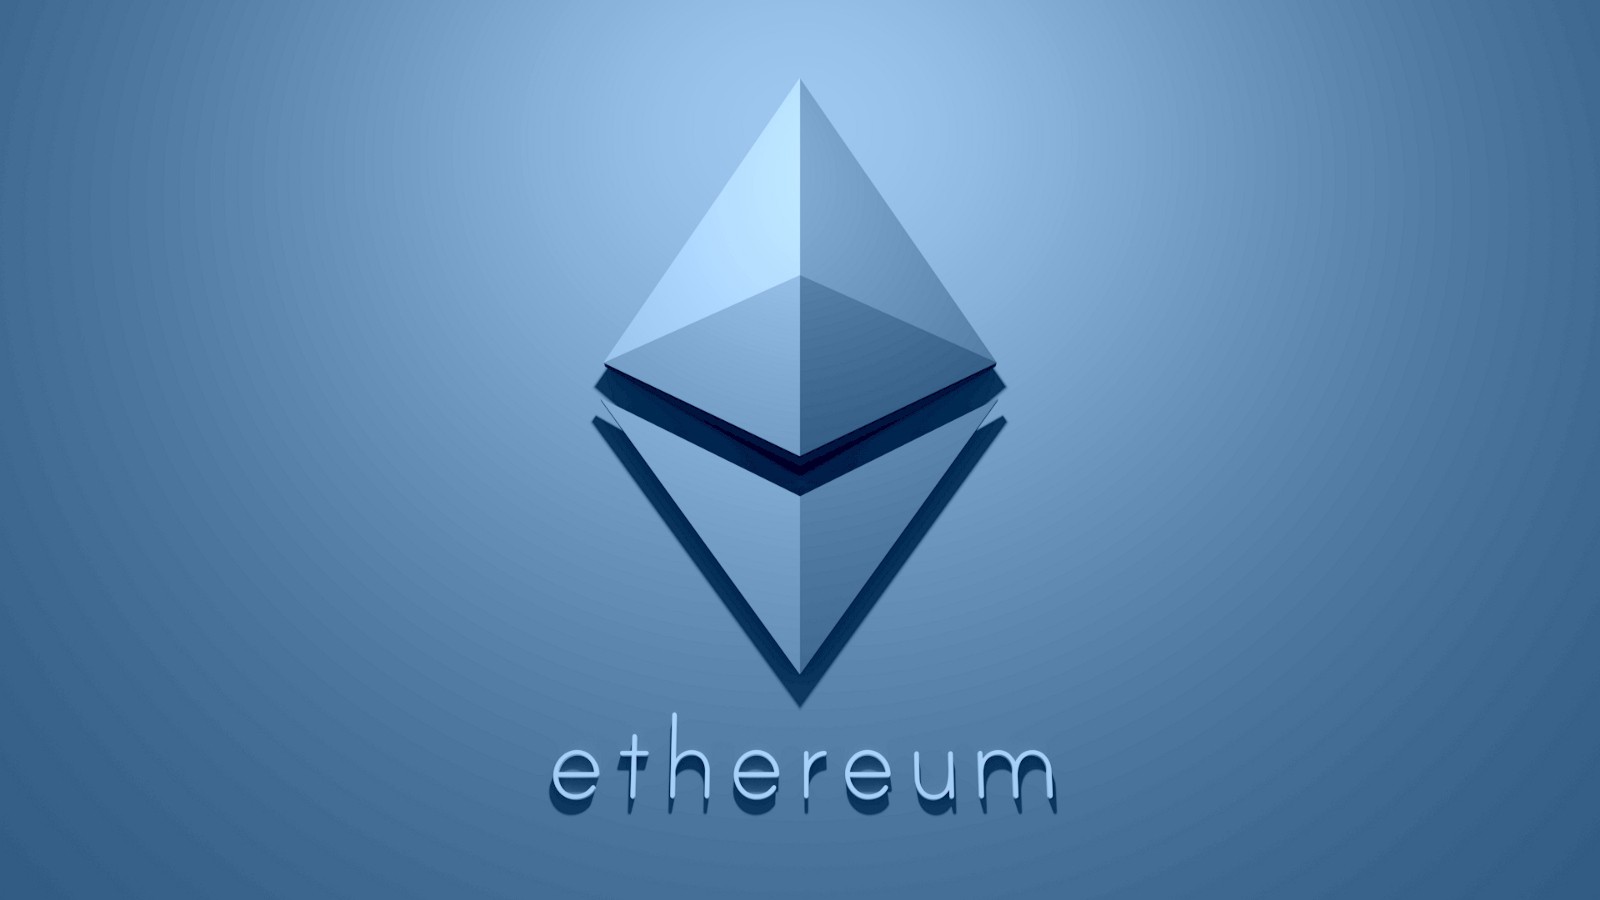 Ethereum - crypto-monnaie prometteuse